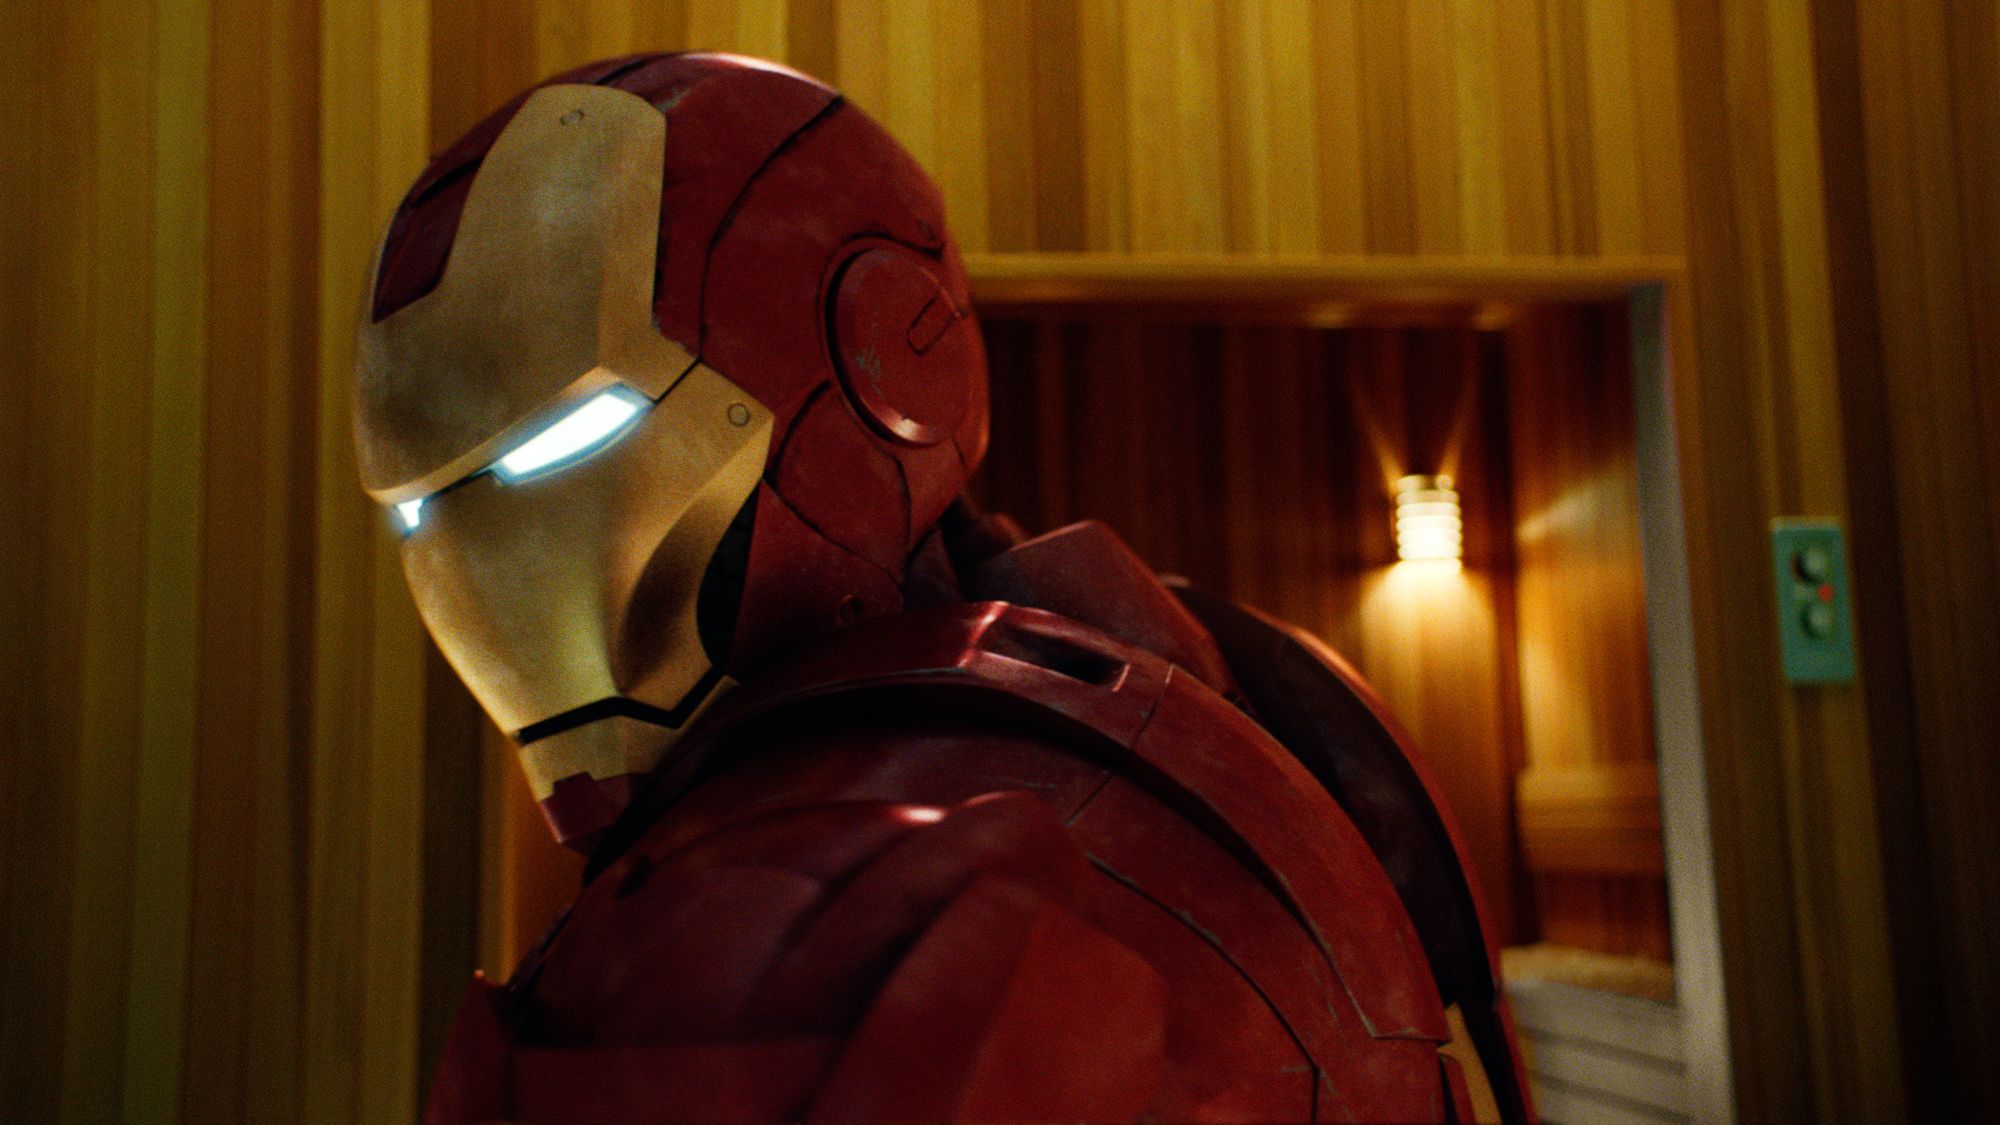 Amazoncom: Iron Man 2 Three-Disc Blu-ray/DVD Combo